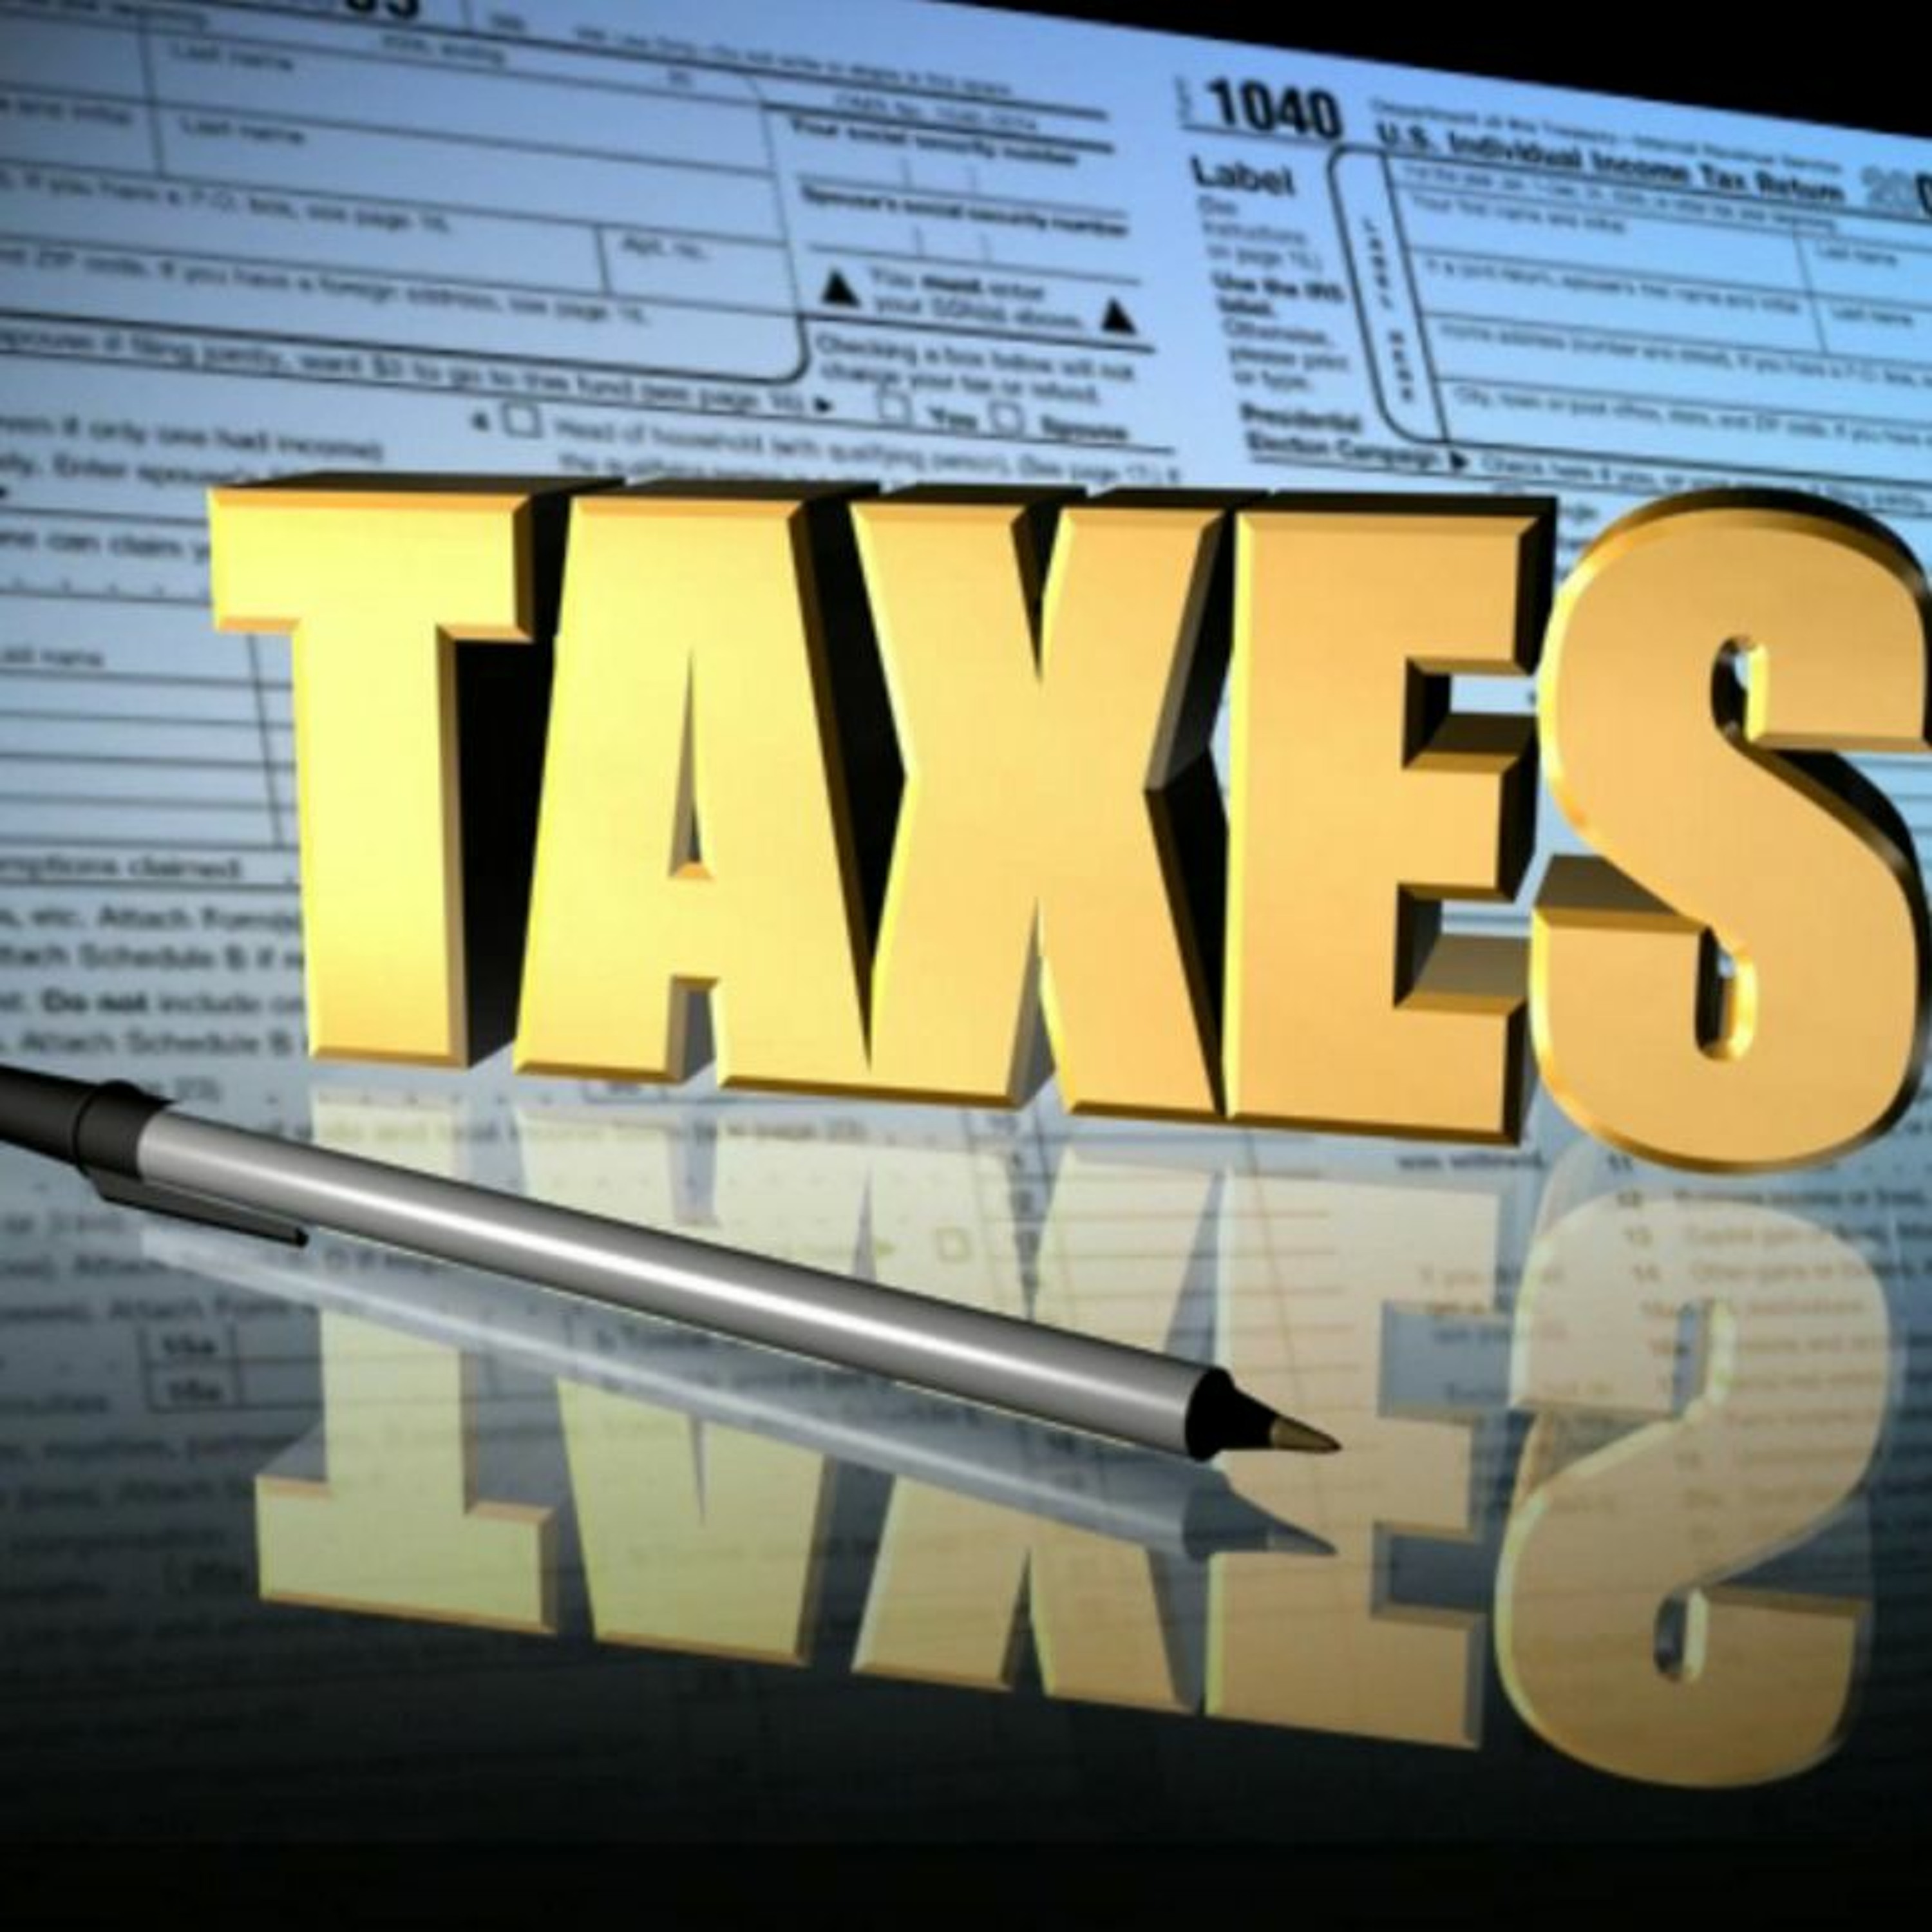 #theREI360show Episode 52: Let's Talk Taxes